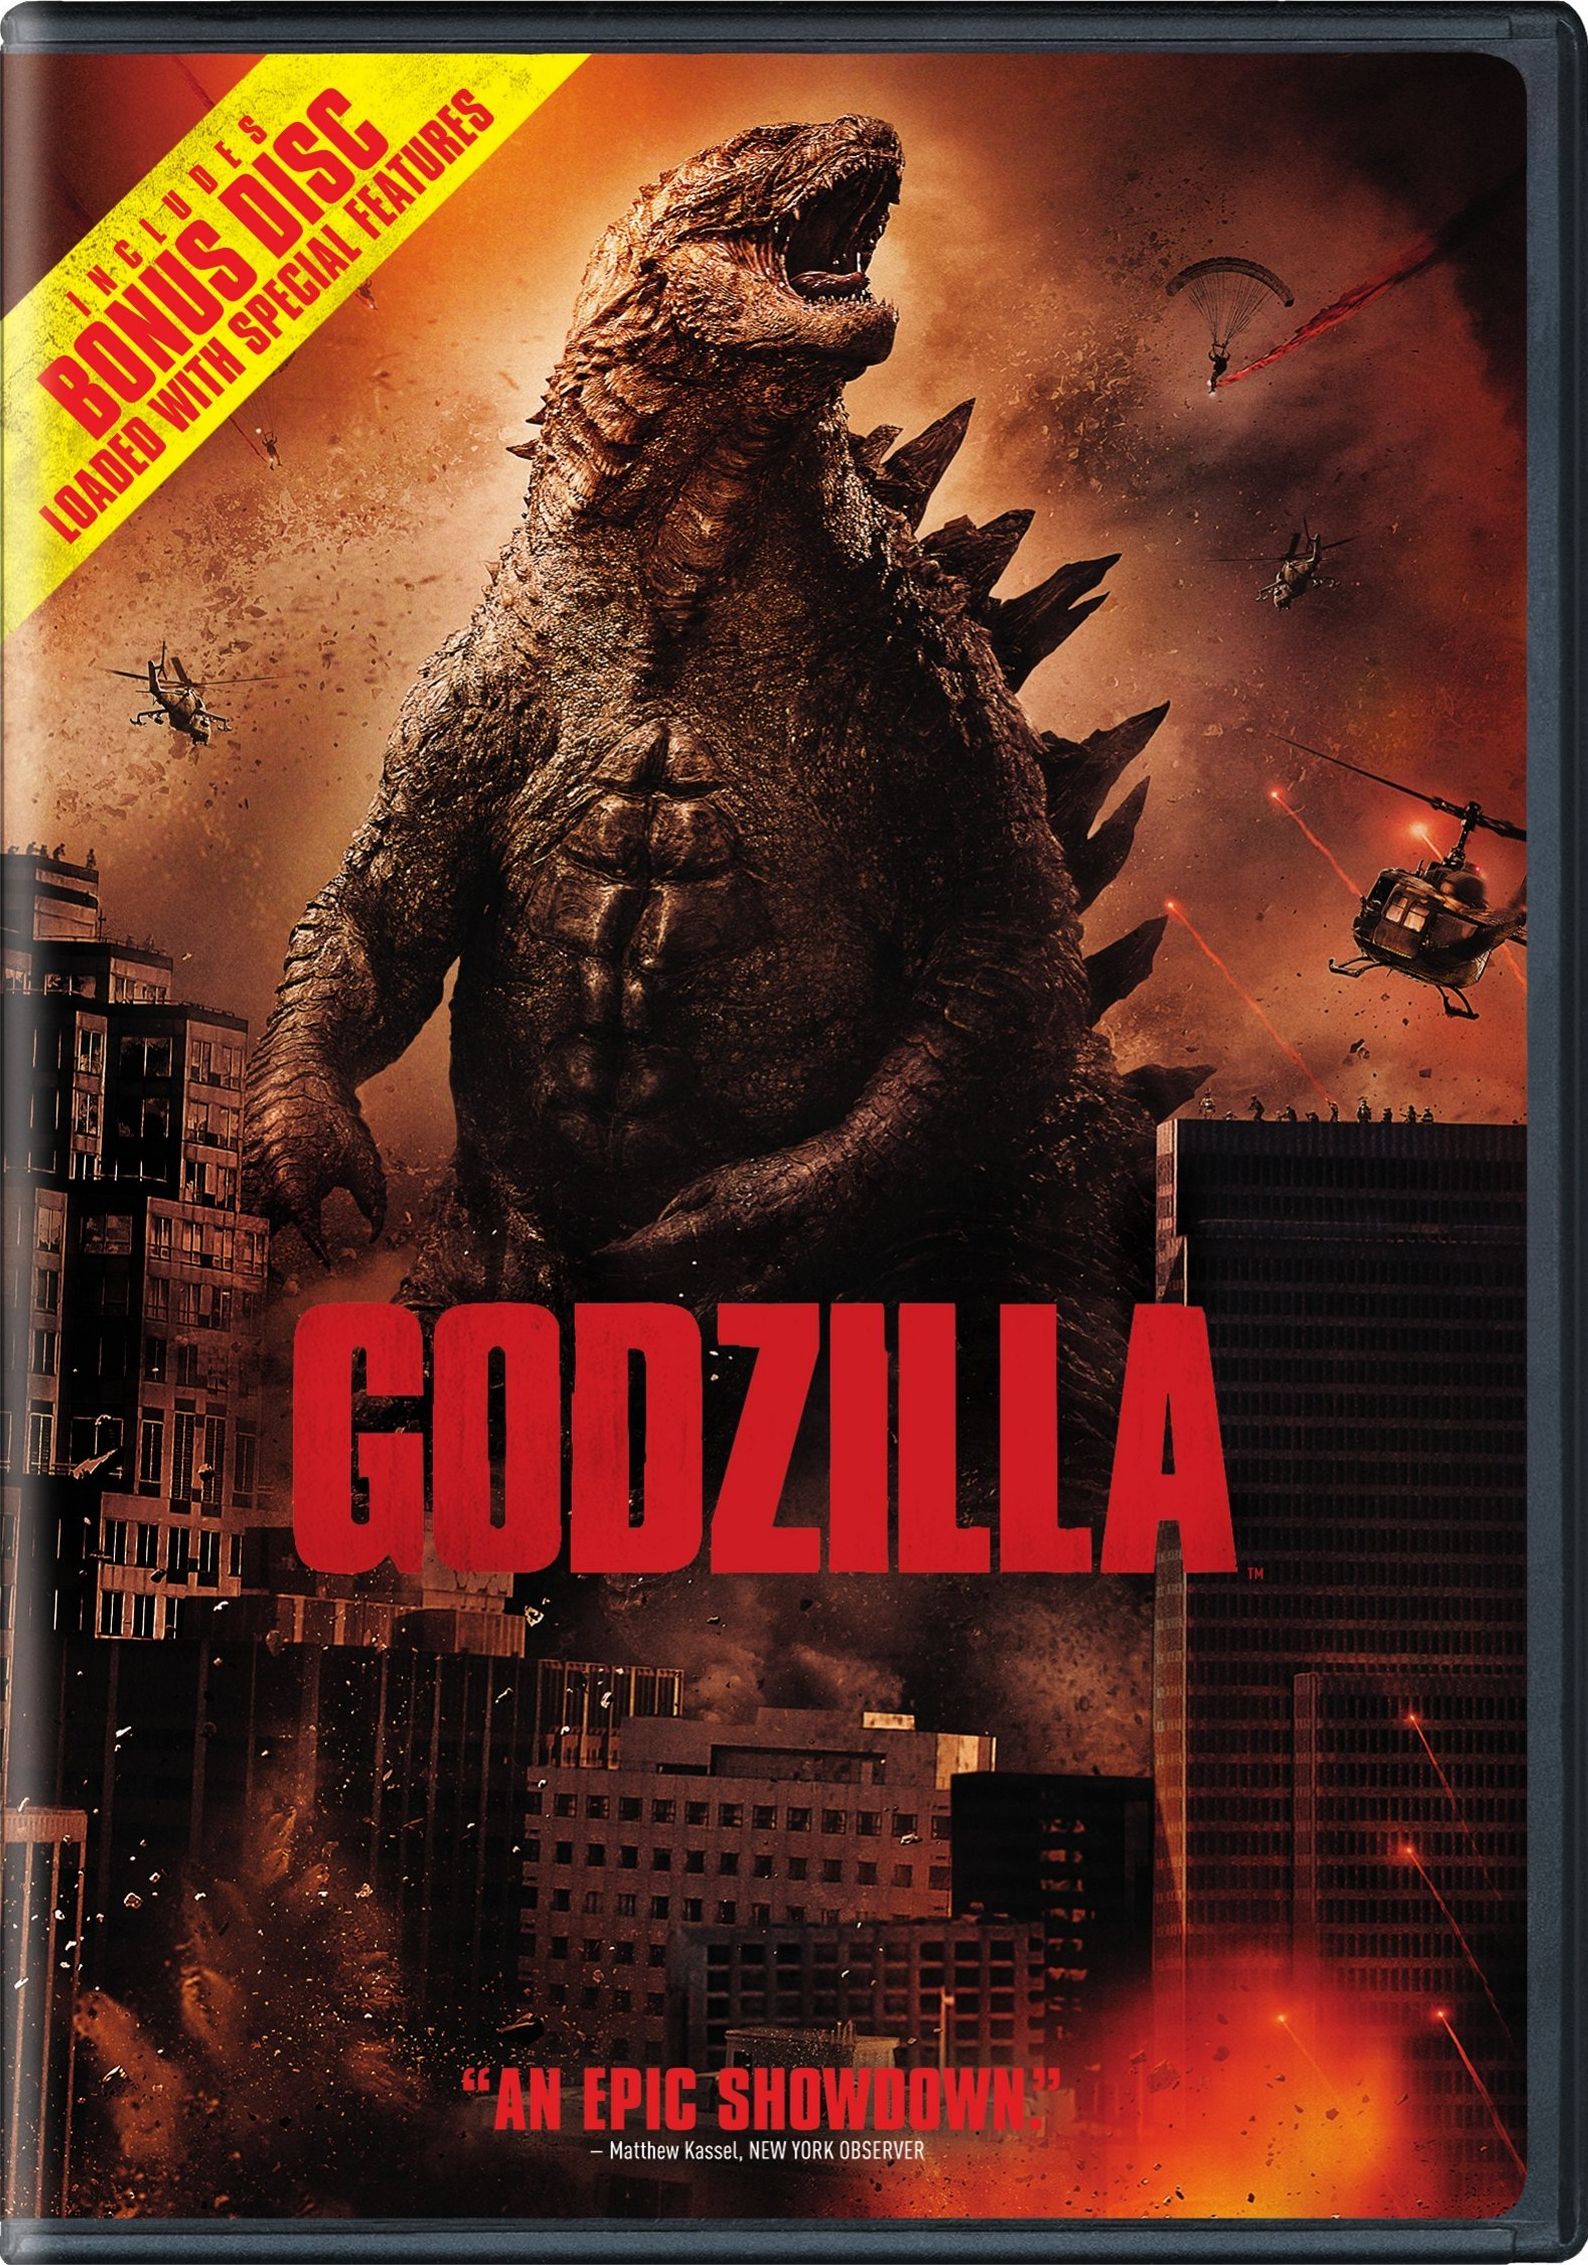 Godzilla DVD Release Date September 16, 2014